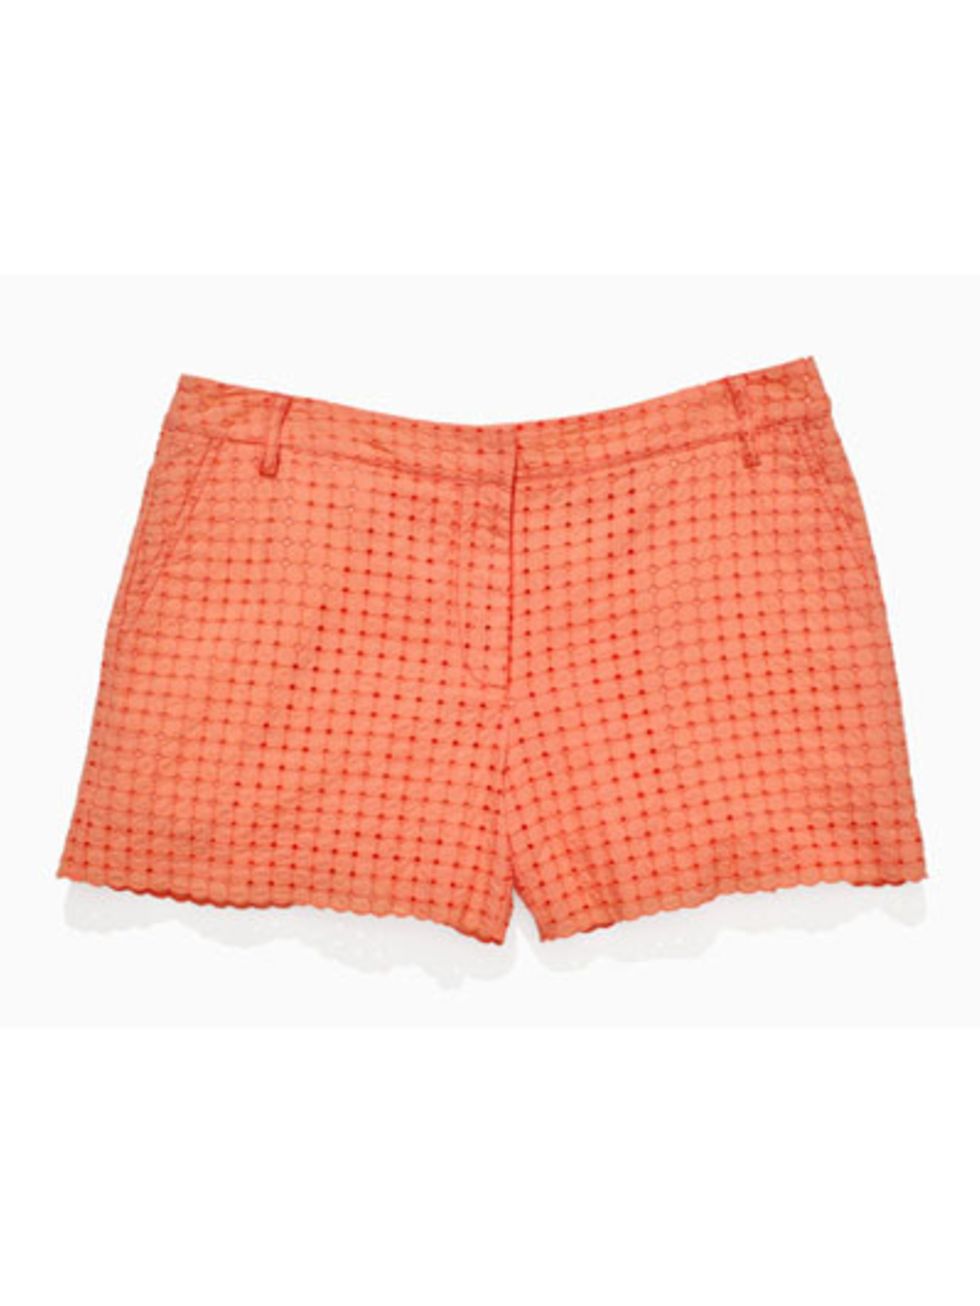 Textile, Pattern, Orange, Shorts, Undergarment, Active shorts, Baby & toddler clothing, Swimwear, Trunks, Underpants, 